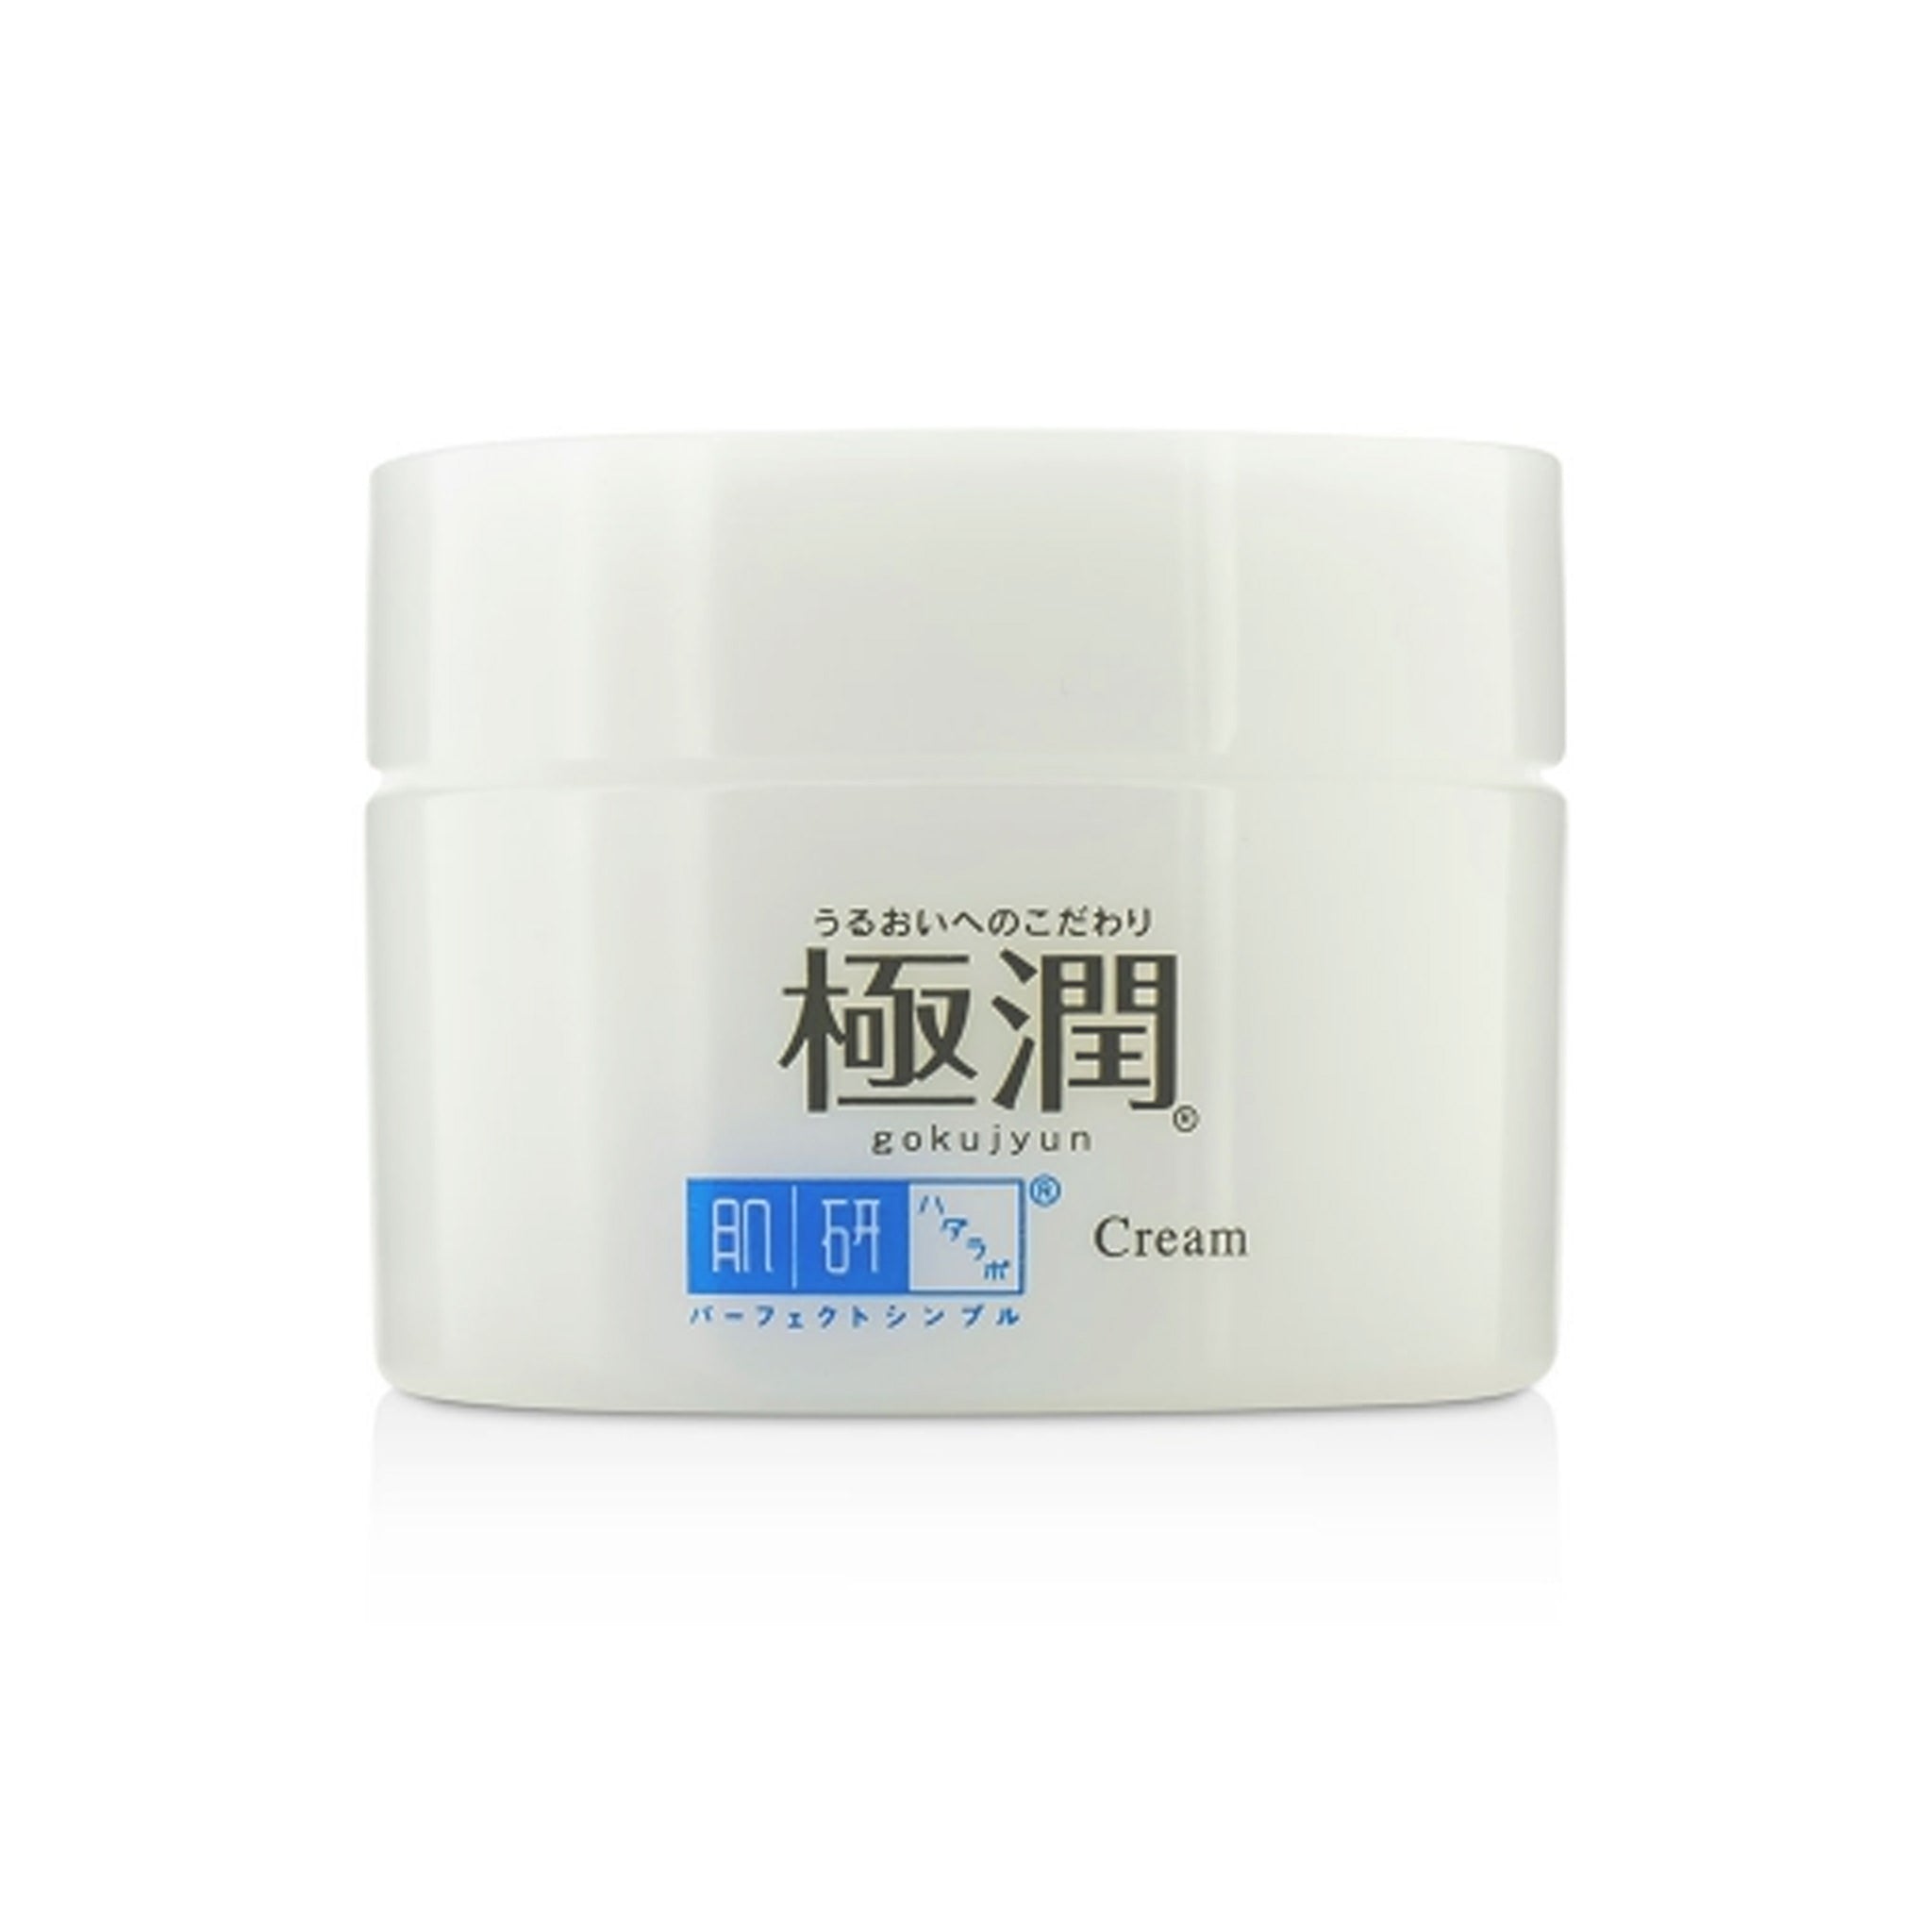 ROHTO Hada Labo Gokujyun Hyaluronic Acid Cream 50g